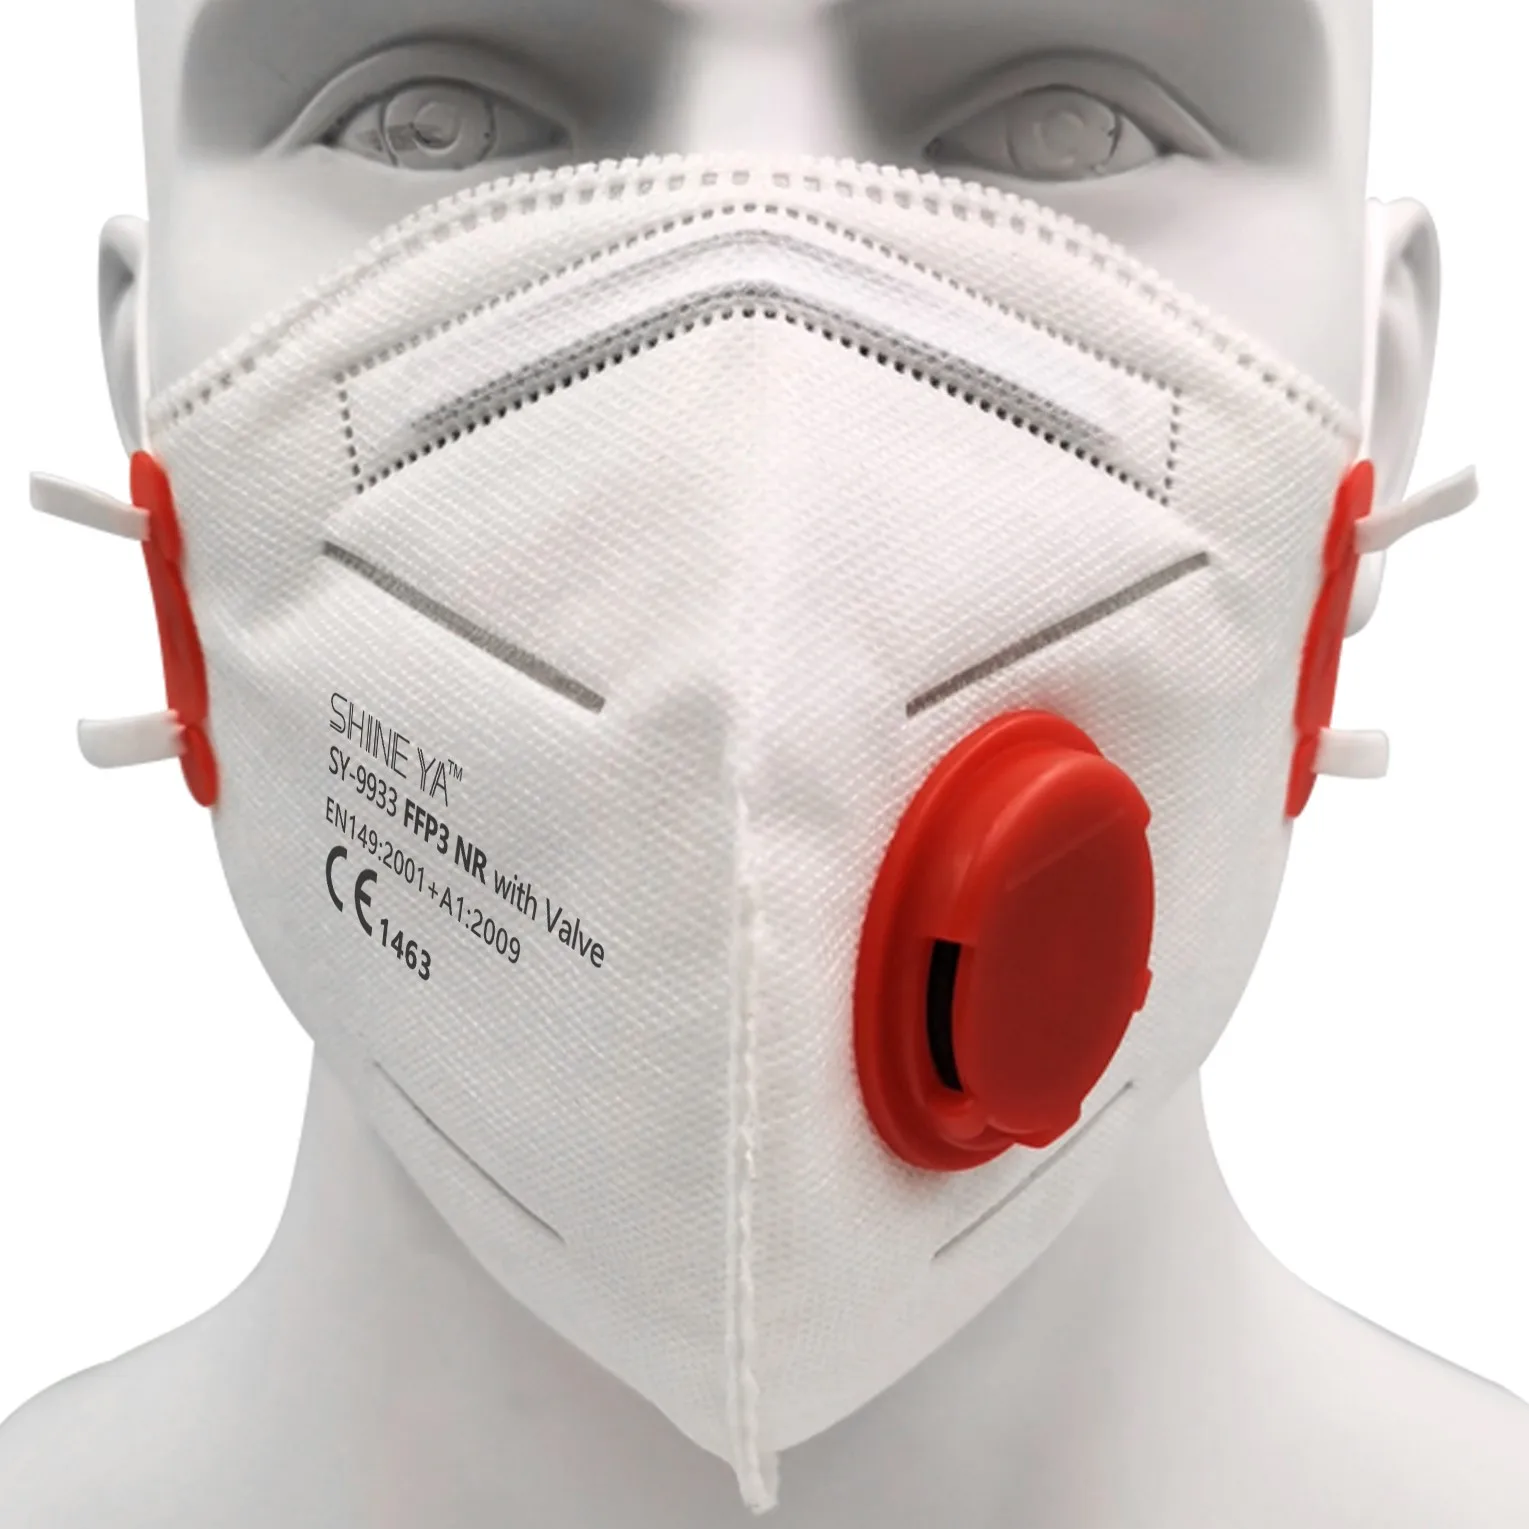 ShineYa EN149 CE Filter Anti Dust P3 P 3 FP3 FP 3 FFP 3 FFP3 Mascherine Mascarilla Masque Masker Respirators Mask with Valve